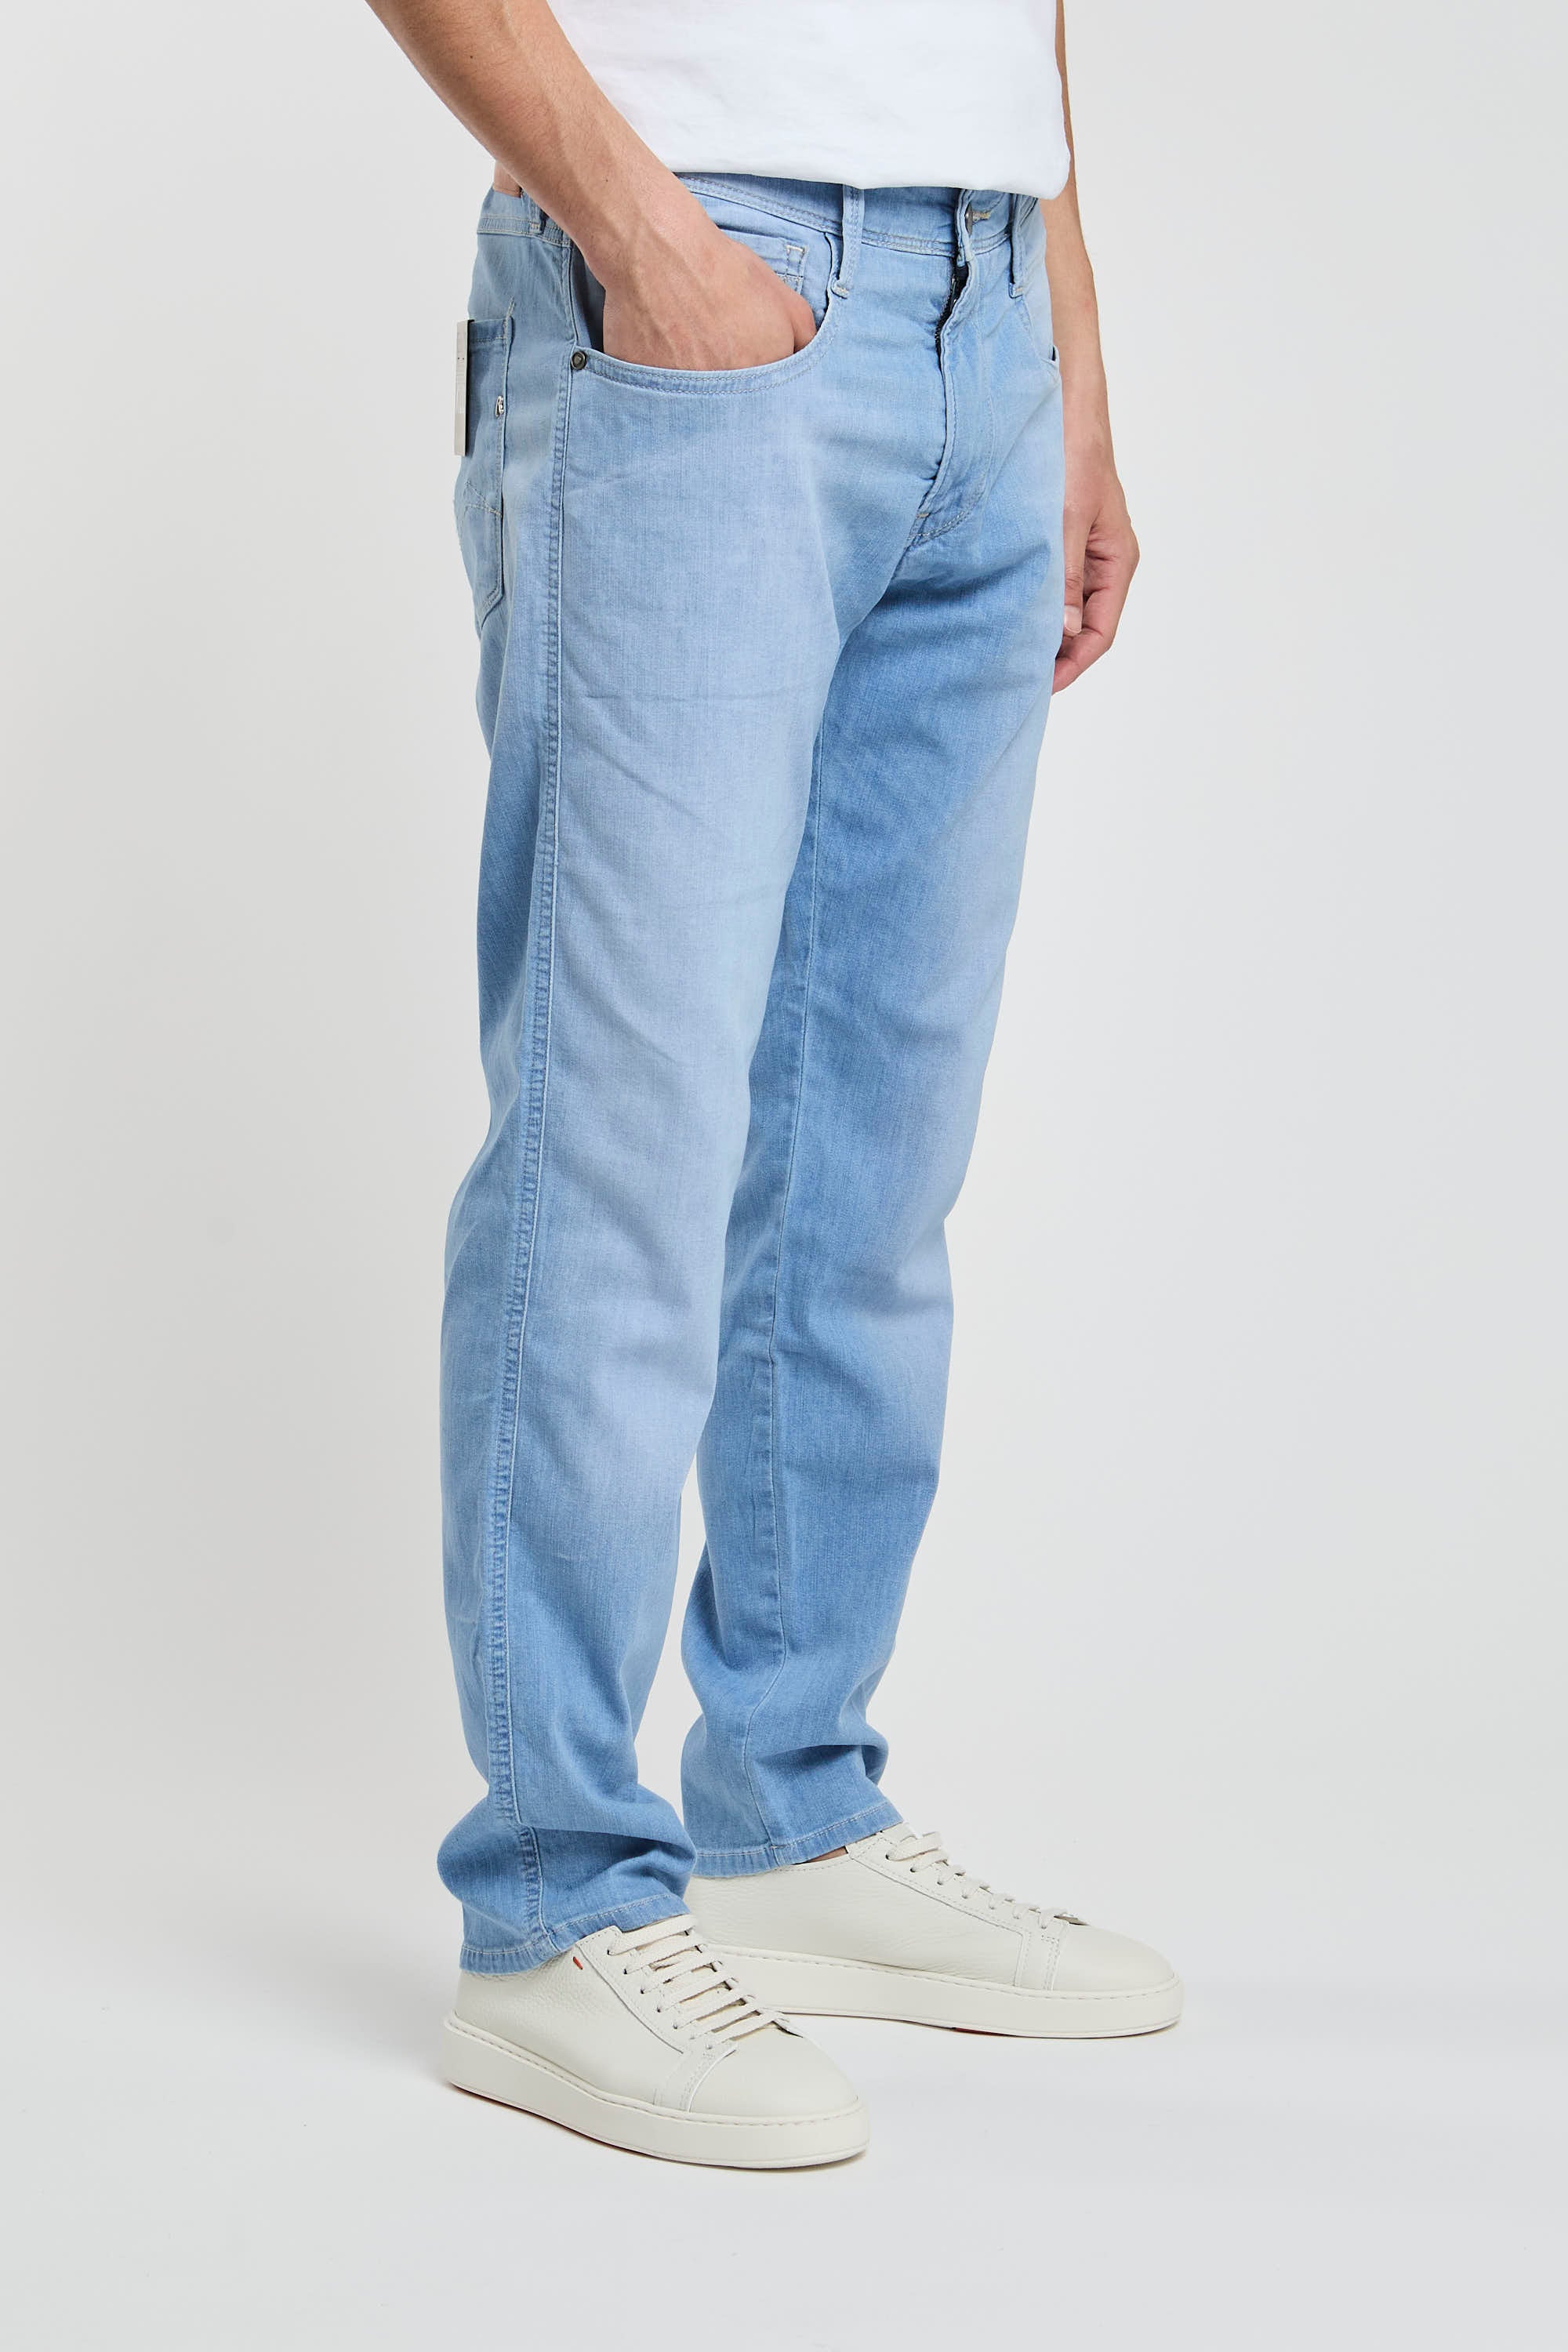 Replay Light Blue Slim Fit Jeans Cotton/Lyocell/Elastomultiester/Elastane-3